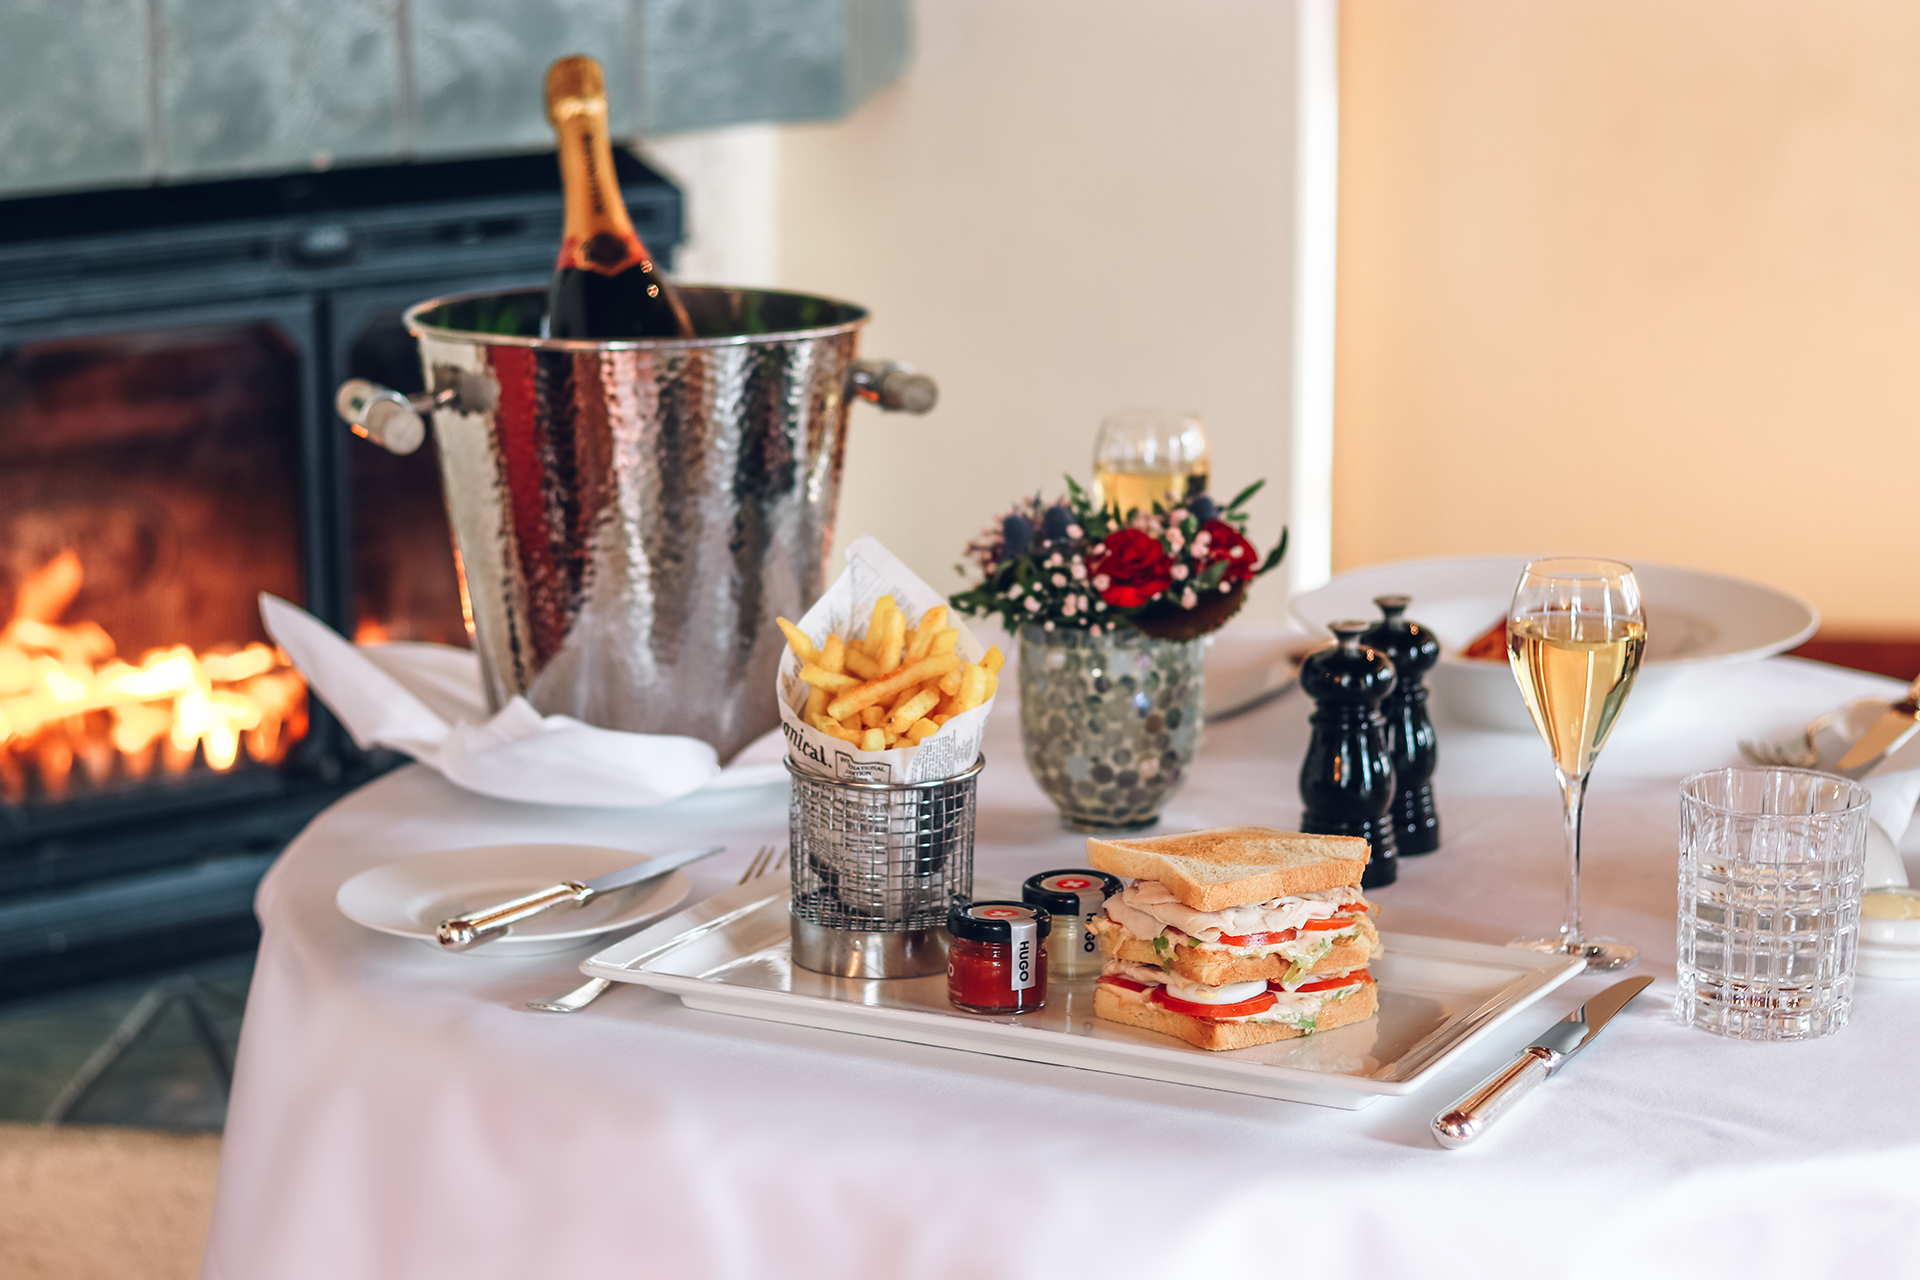 Room Service at Grand Hotel Zermatterhof - Champagne